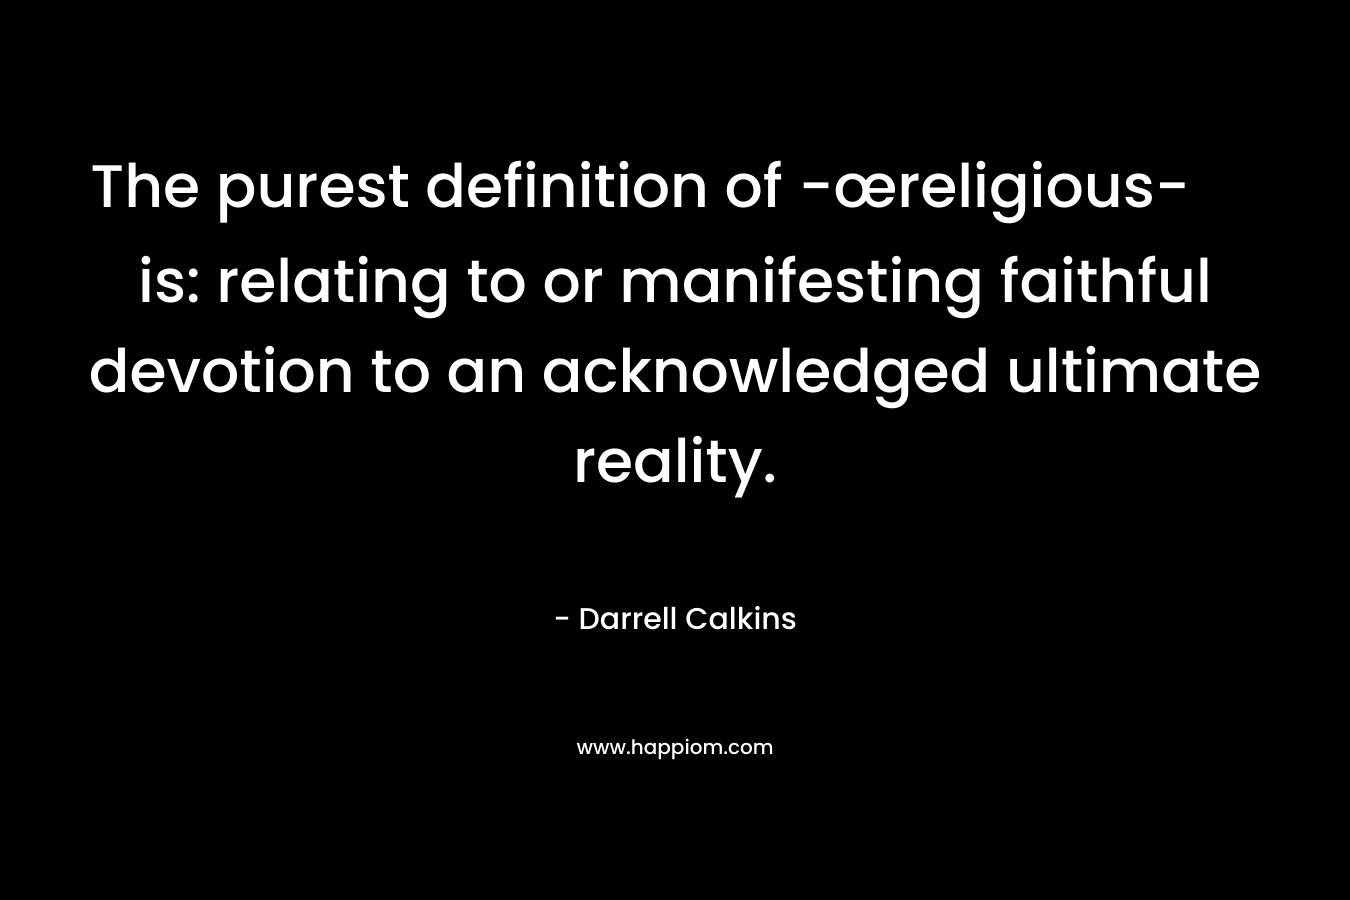 The purest definition of -œreligious- is: relating to or manifesting faithful devotion to an acknowledged ultimate reality. – Darrell Calkins